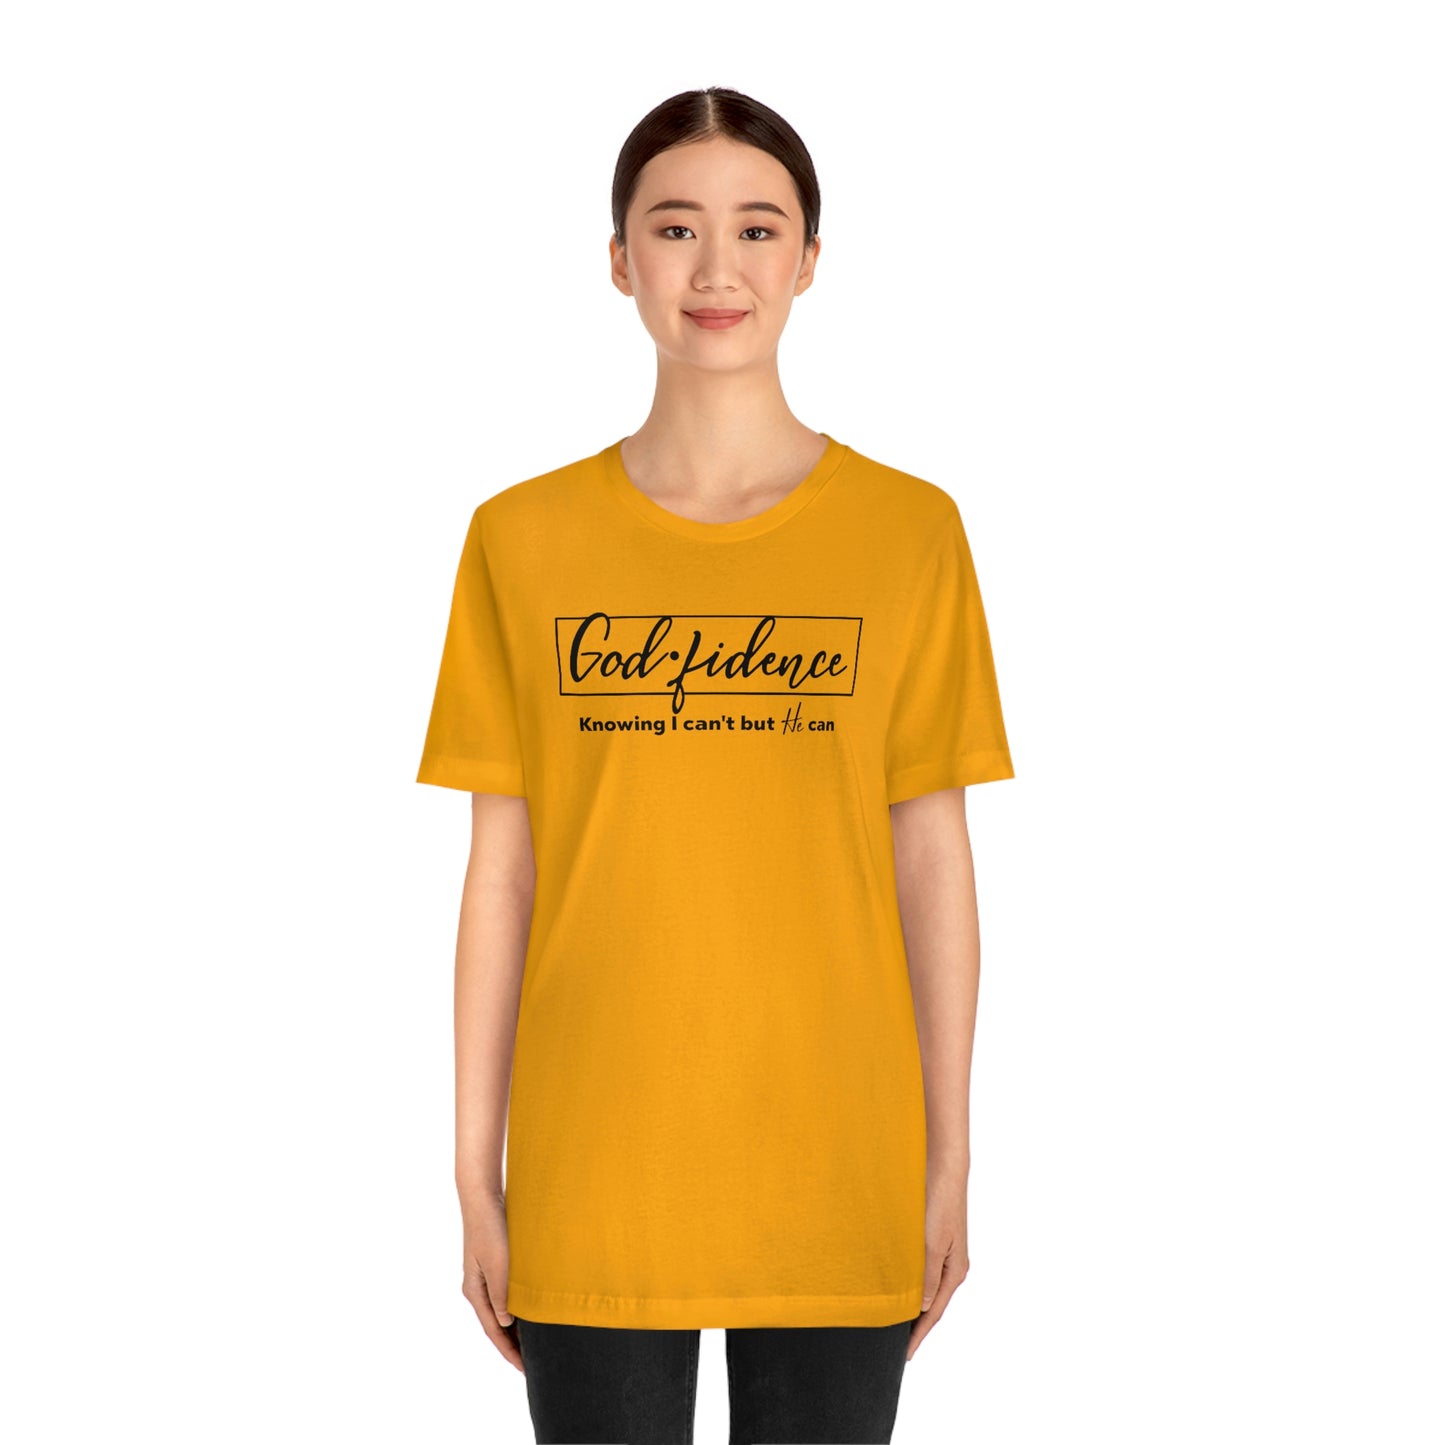 Godfidence, Christian Shirt, Jesus Shirt, Religious Shirt, Faith Shirt, Spiritual Shirt, God Fidence, Faith in God, Trust God, Church Shirt